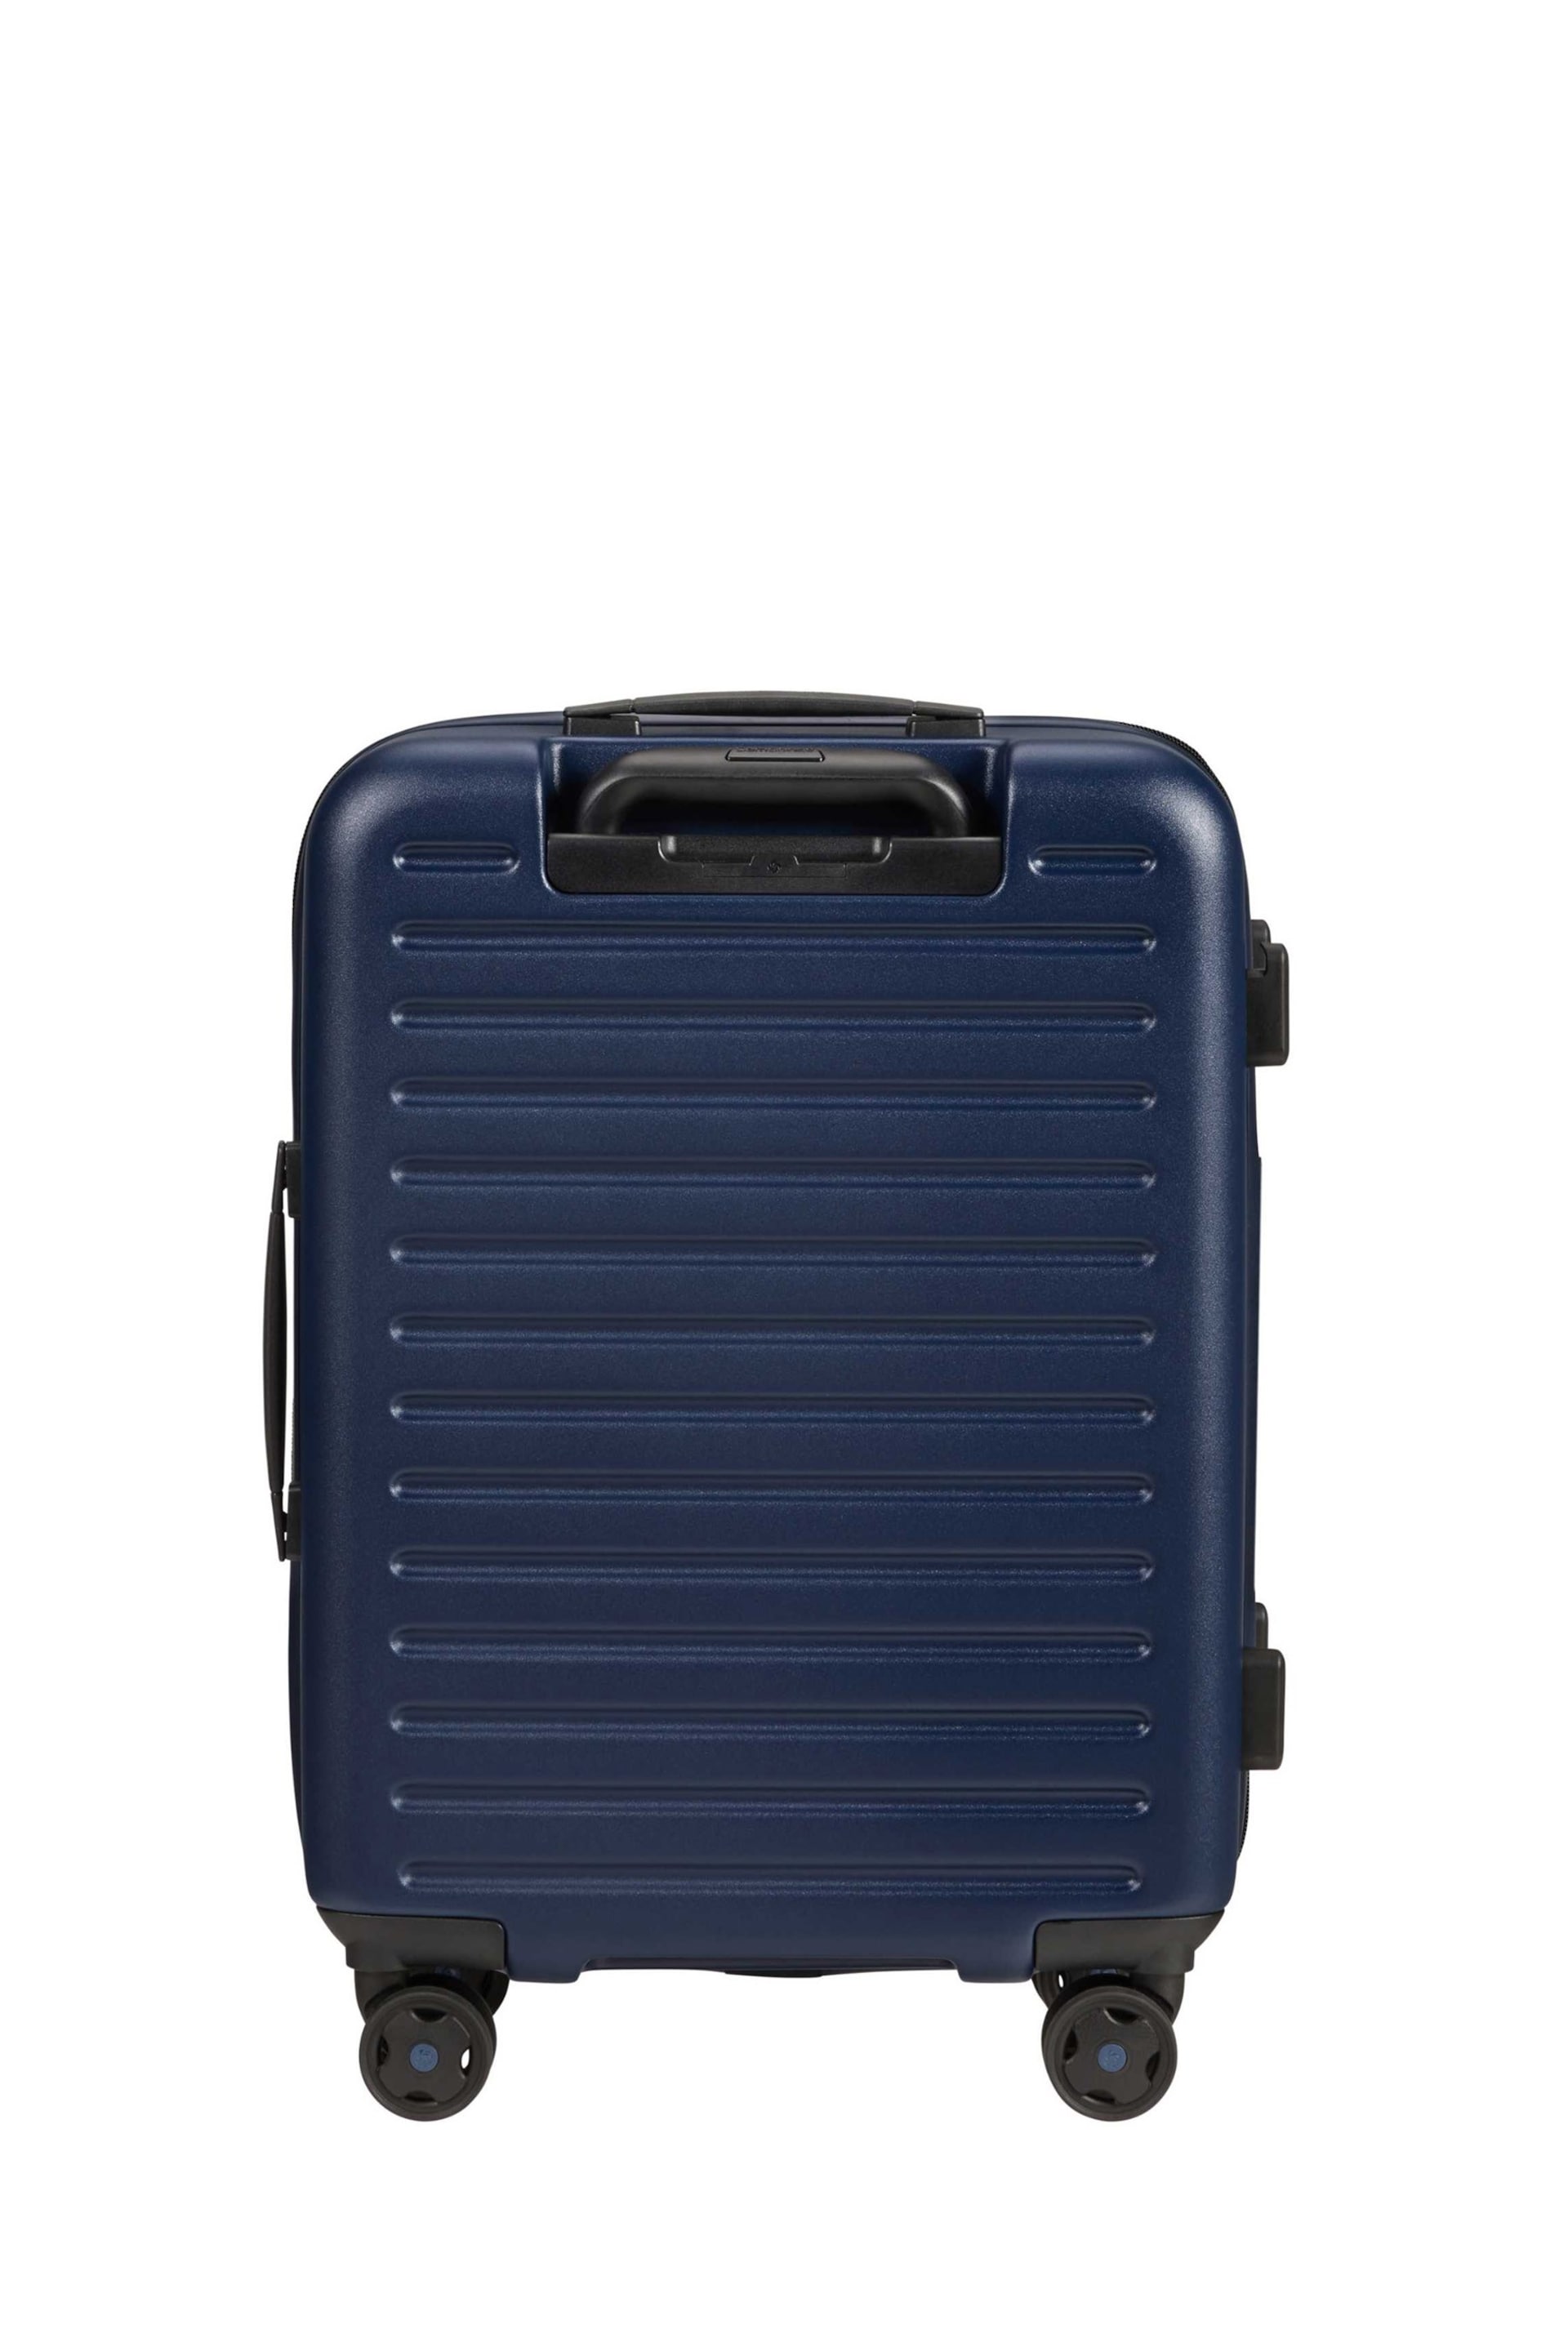 Samsonite StackD Spinner Cabin Suitcase 55cm - Image 2 of 13